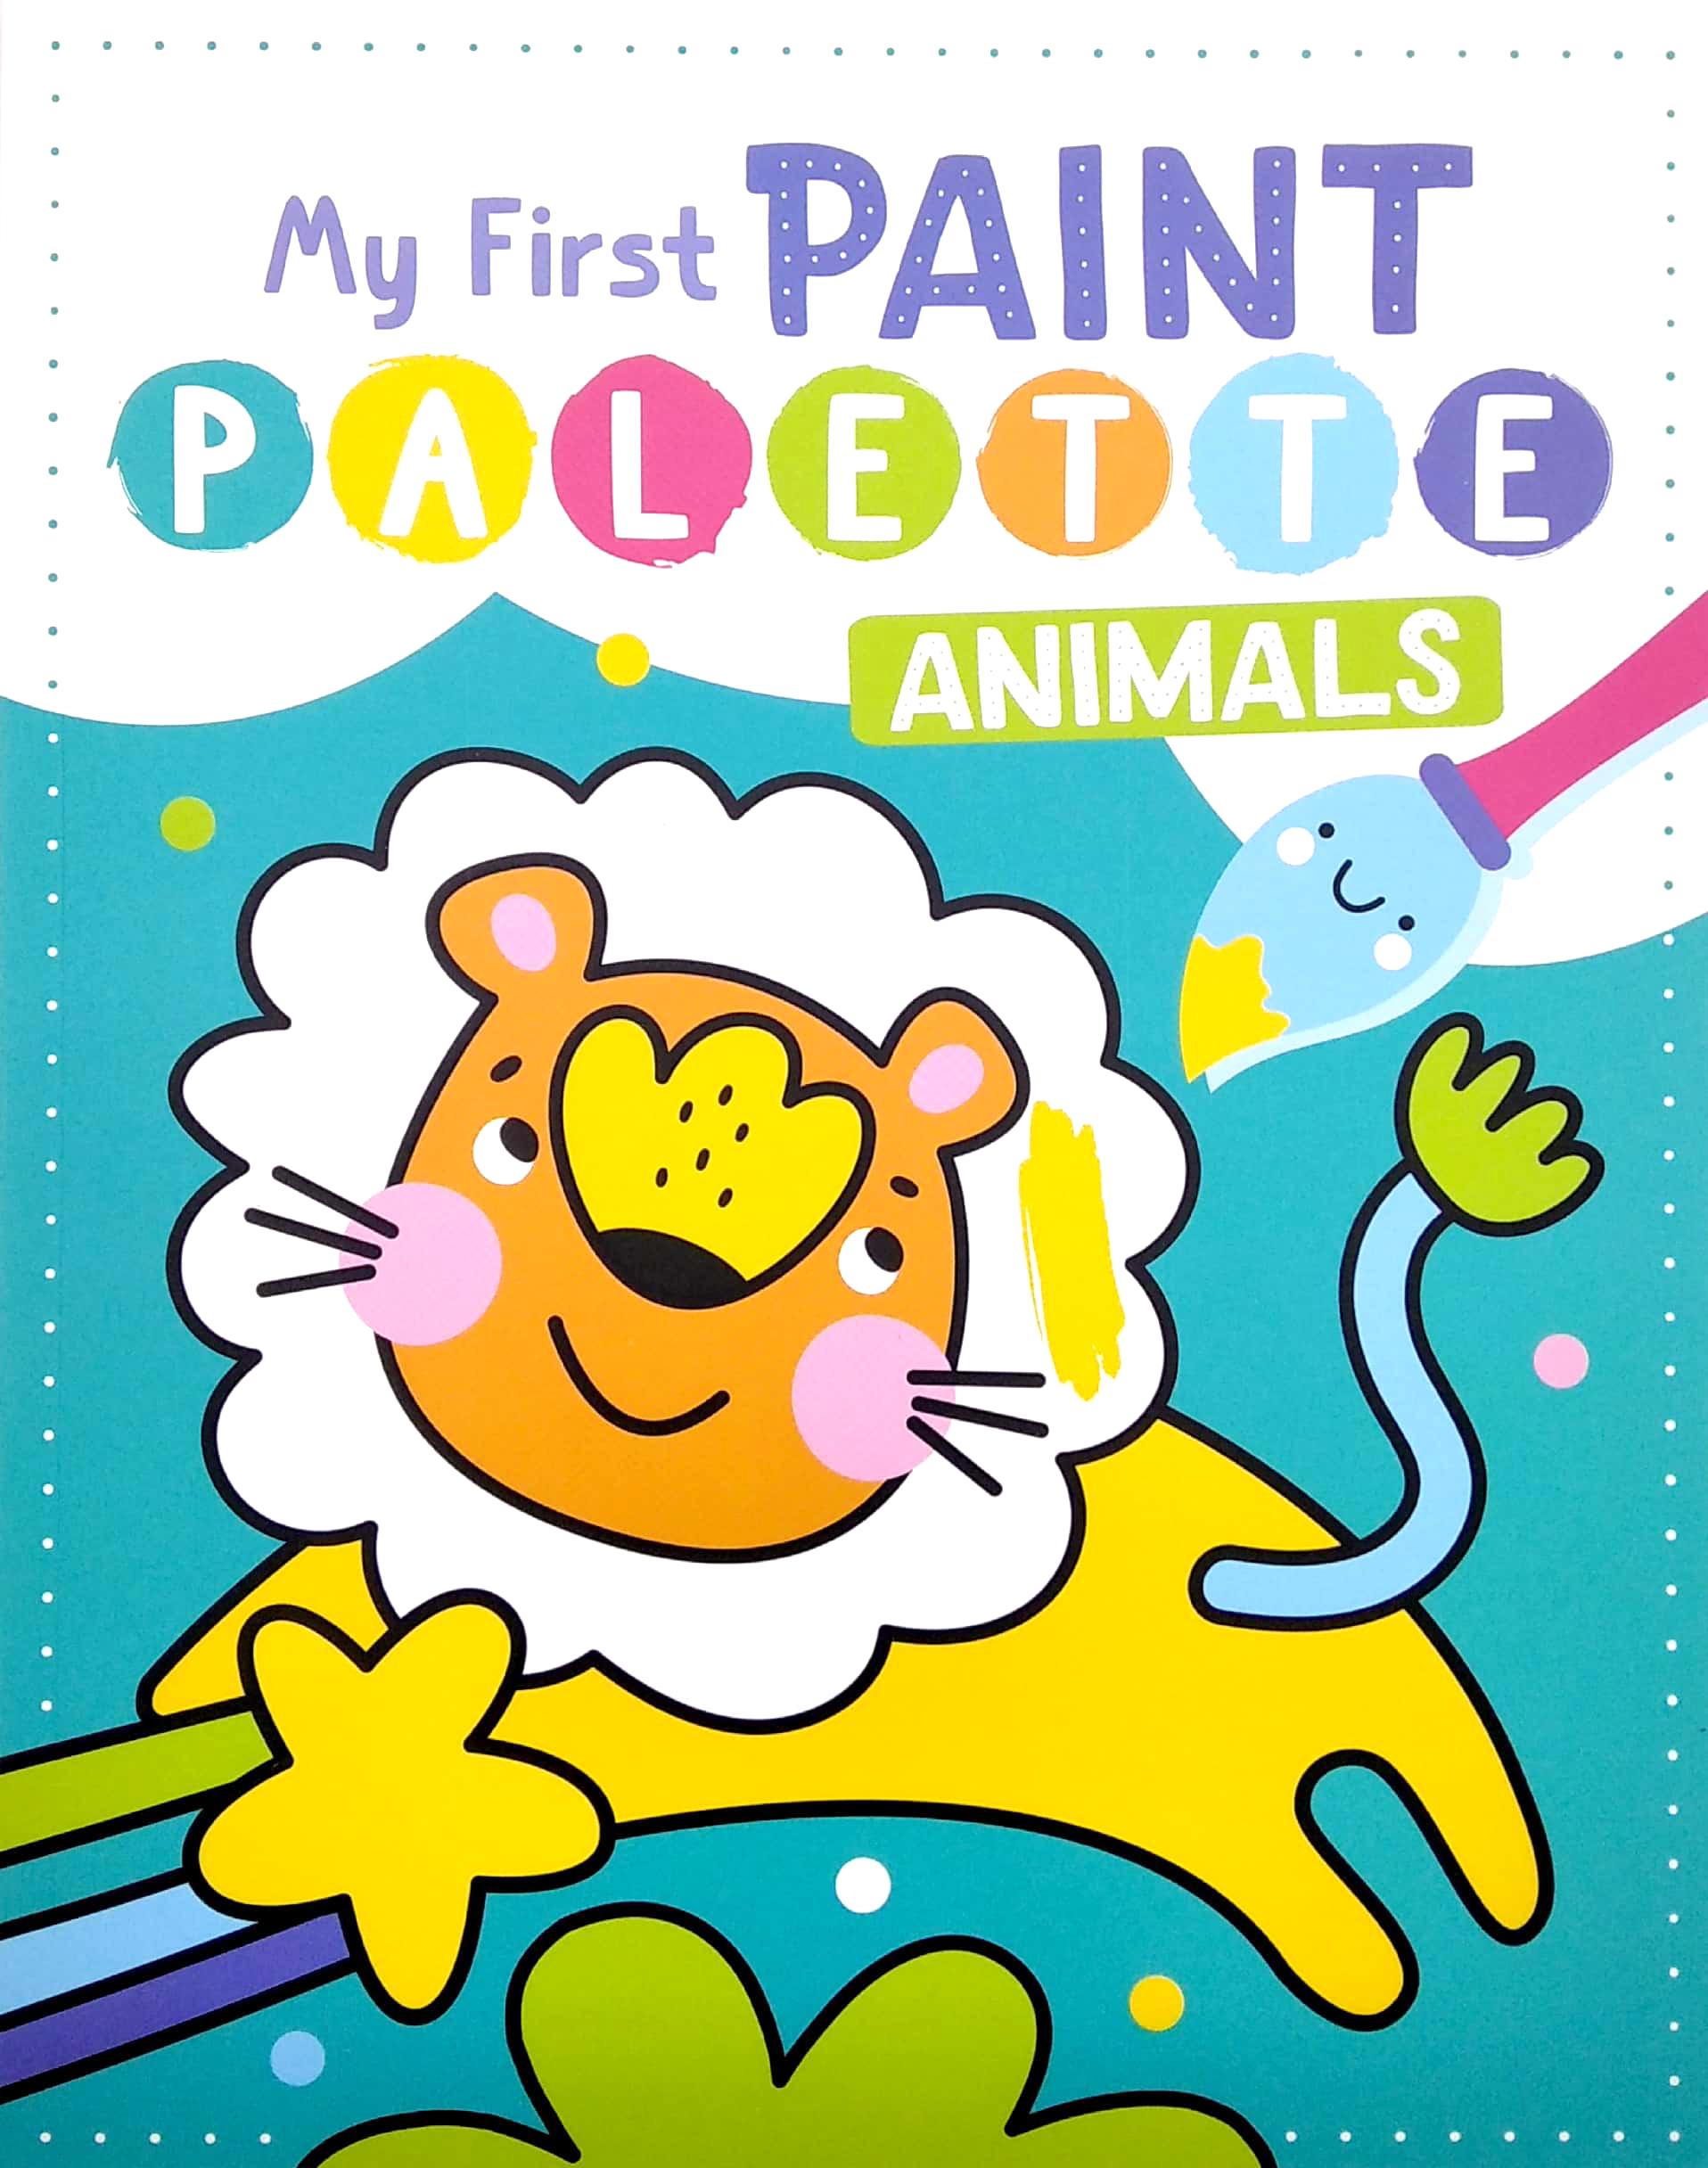 My First Paint Palette: Animals